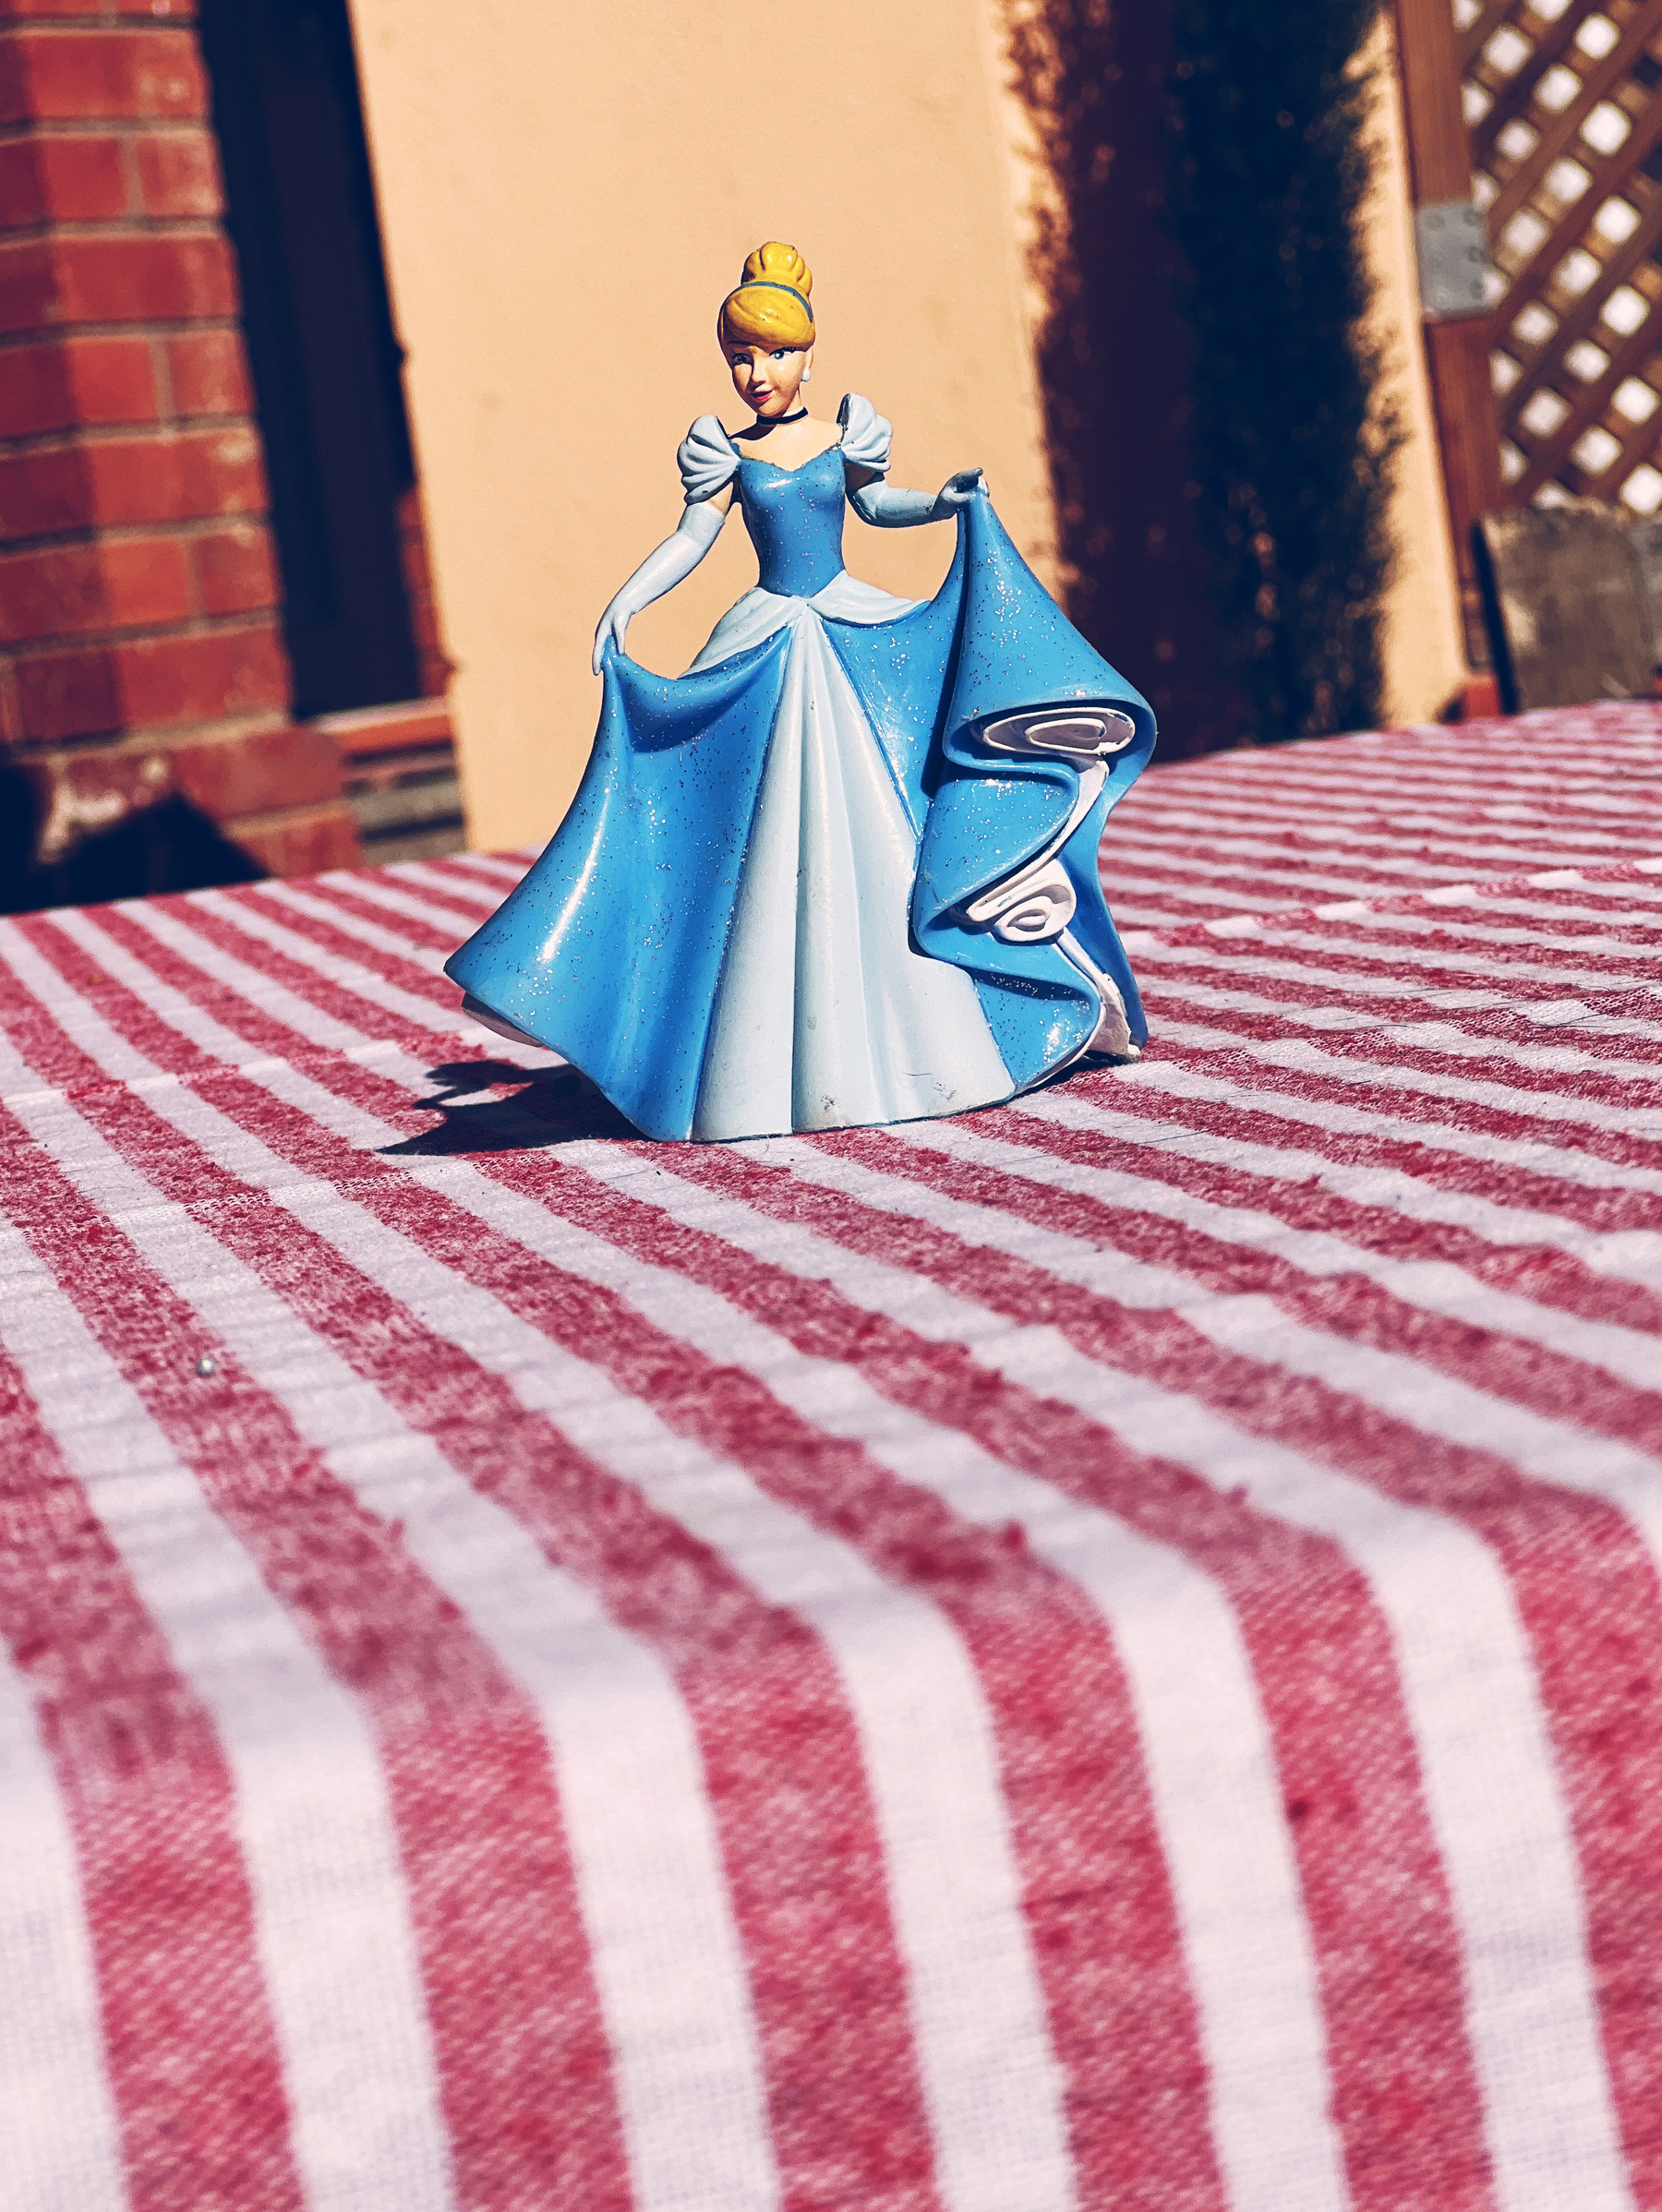 A Disney princess on a table. 